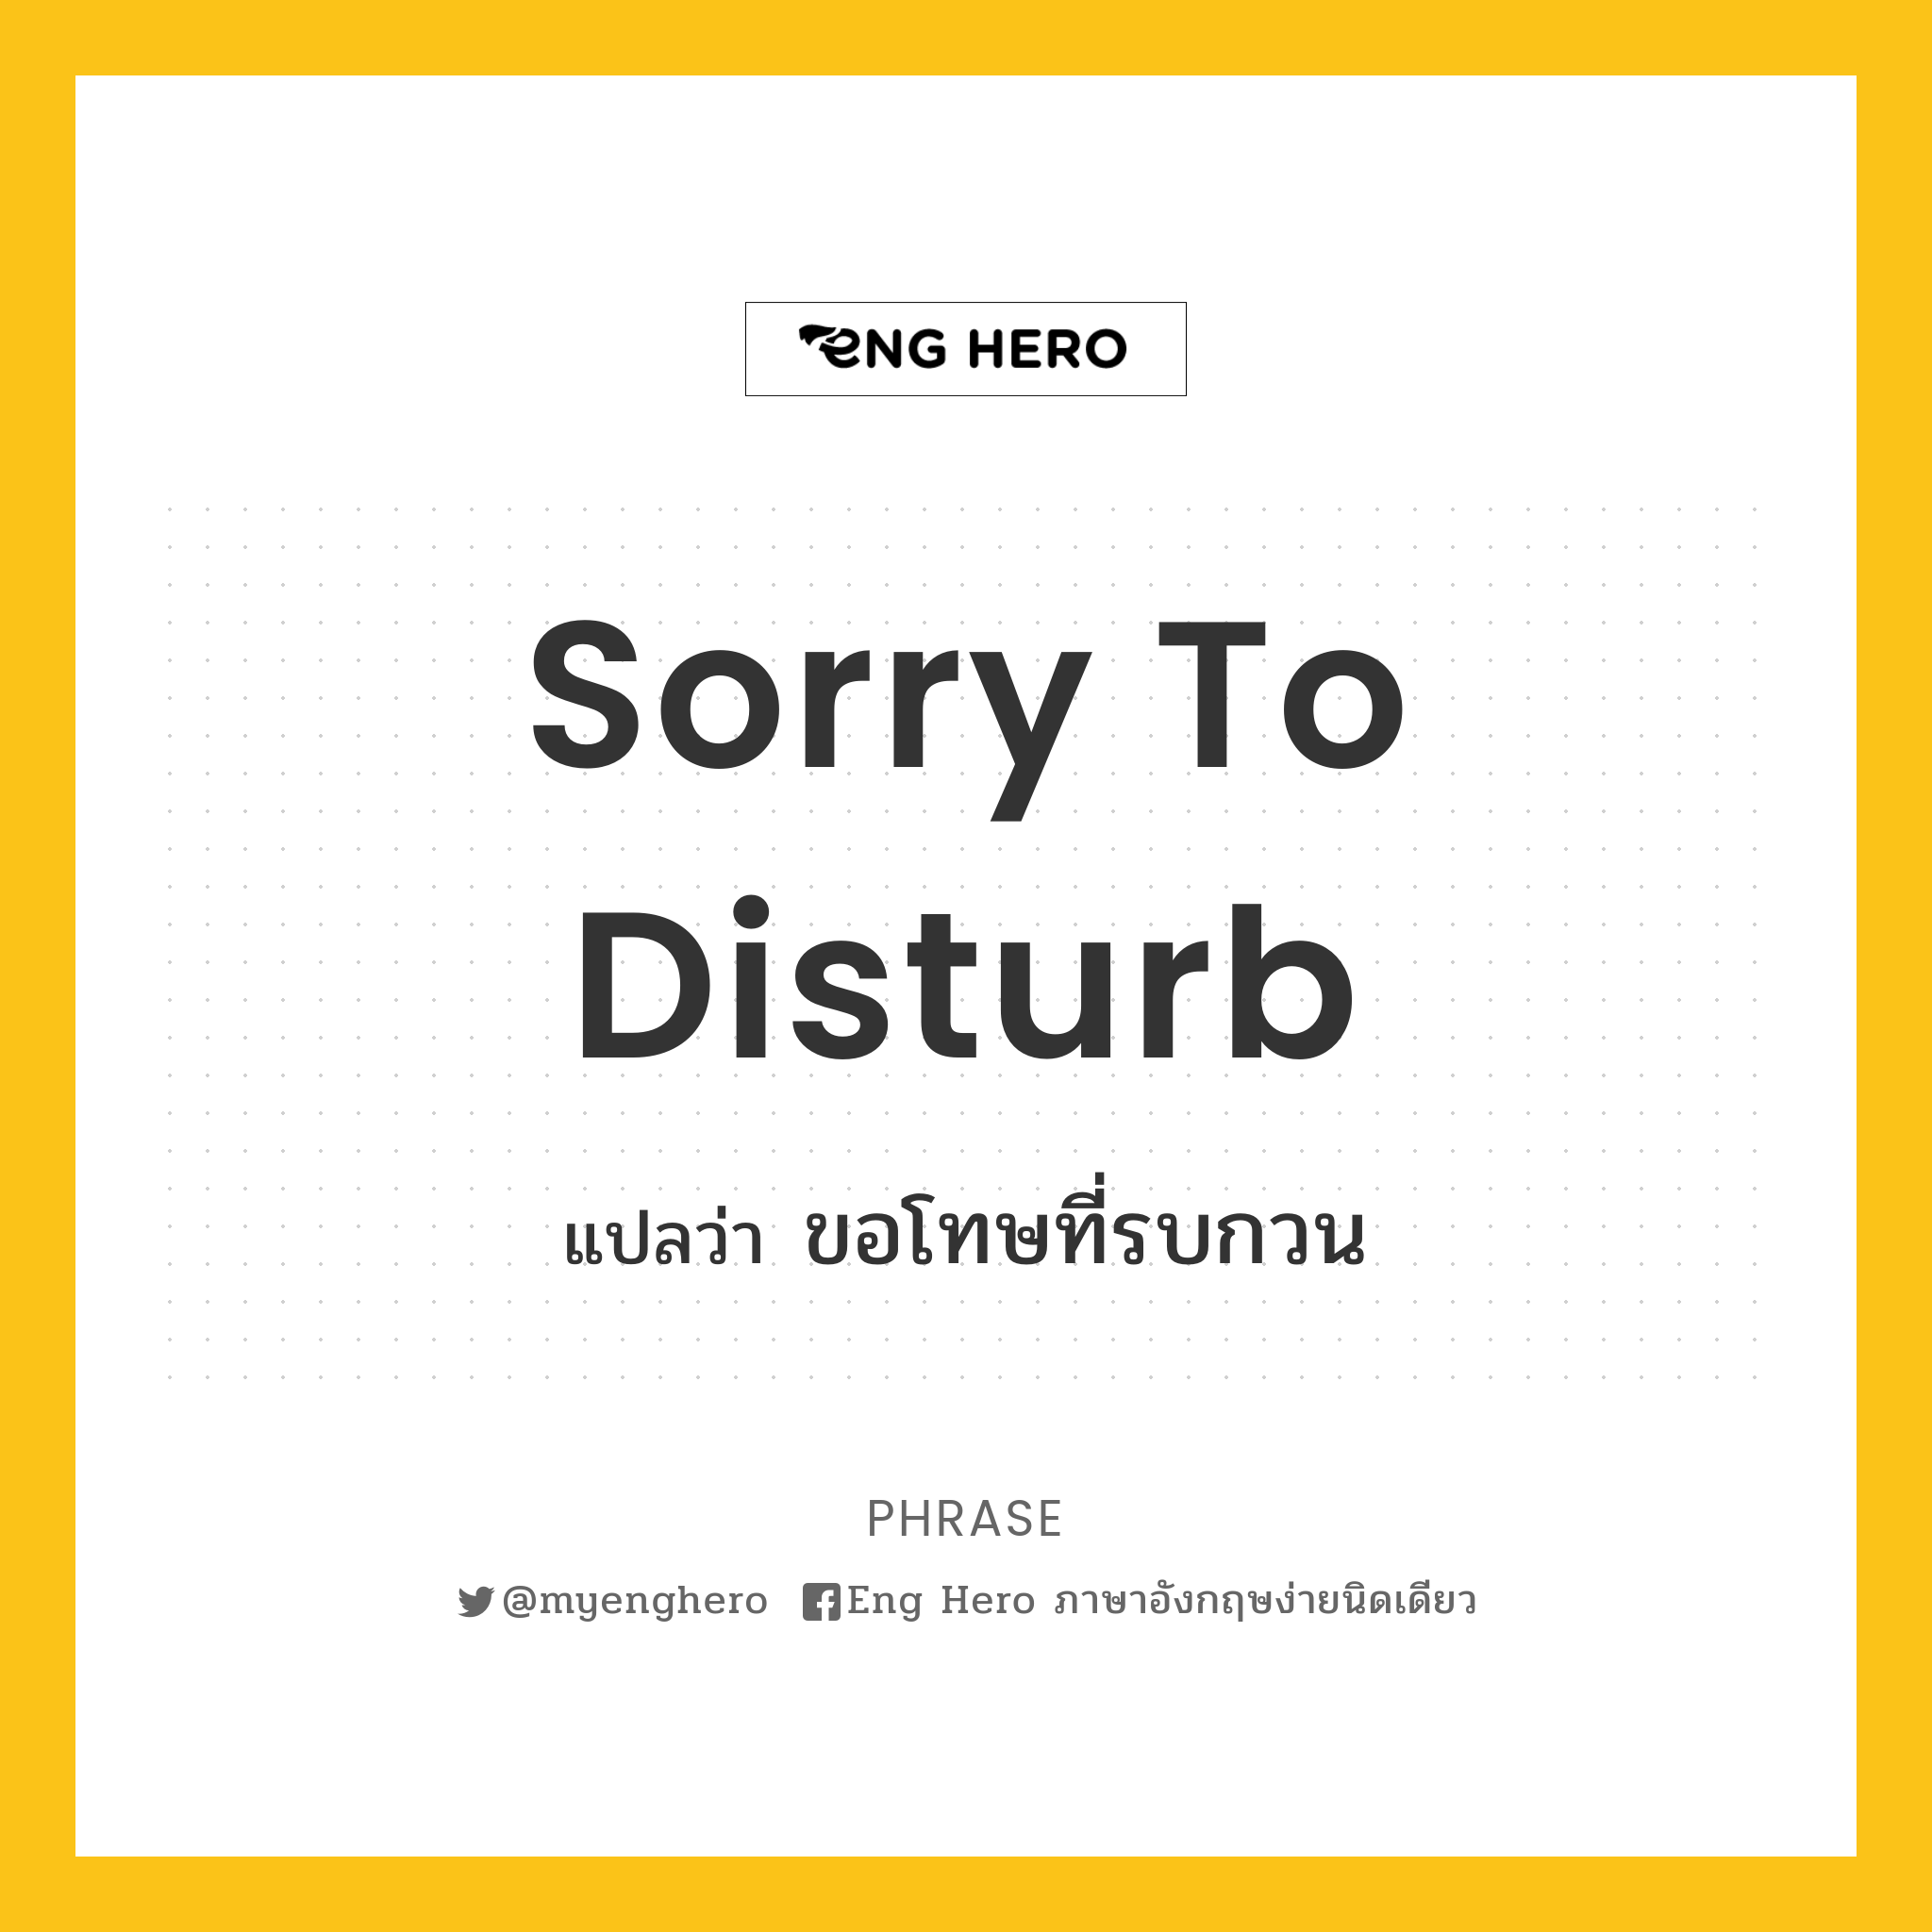 Sorry to disturb